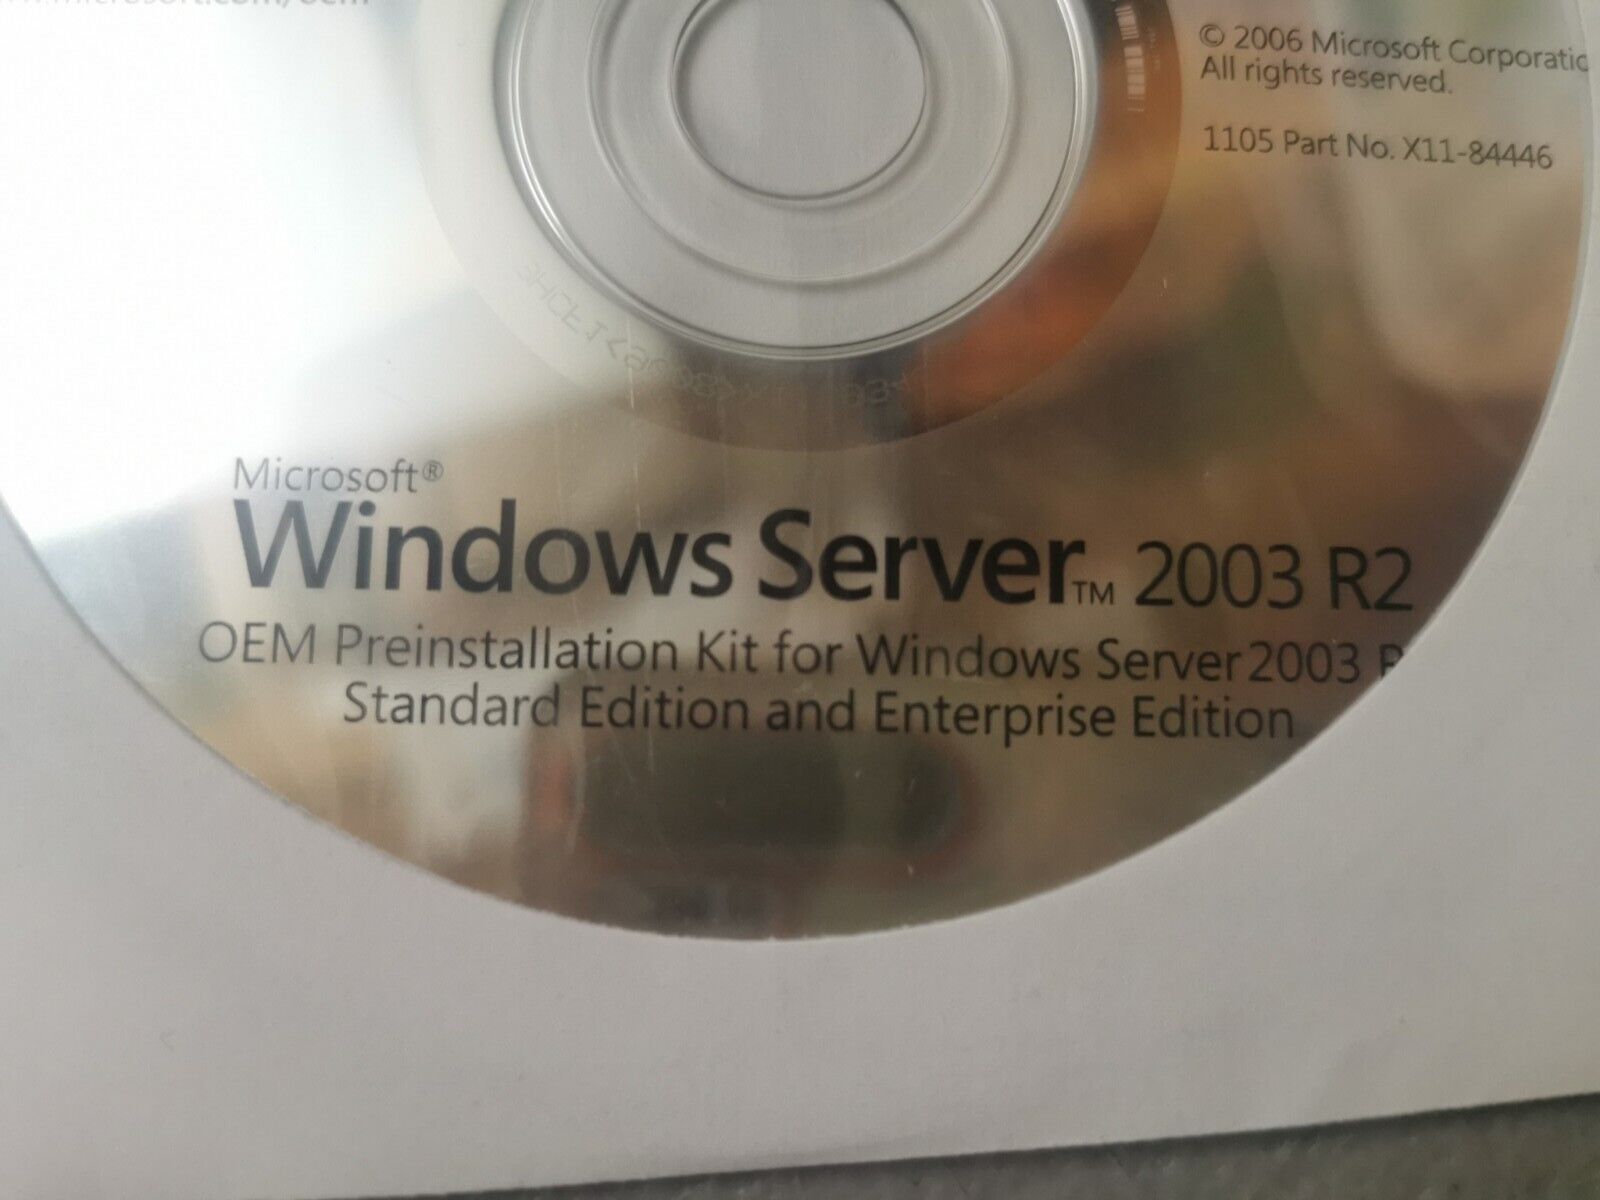 windows server 2003 r2 standard and enterprise x11-84446 reinstall disc